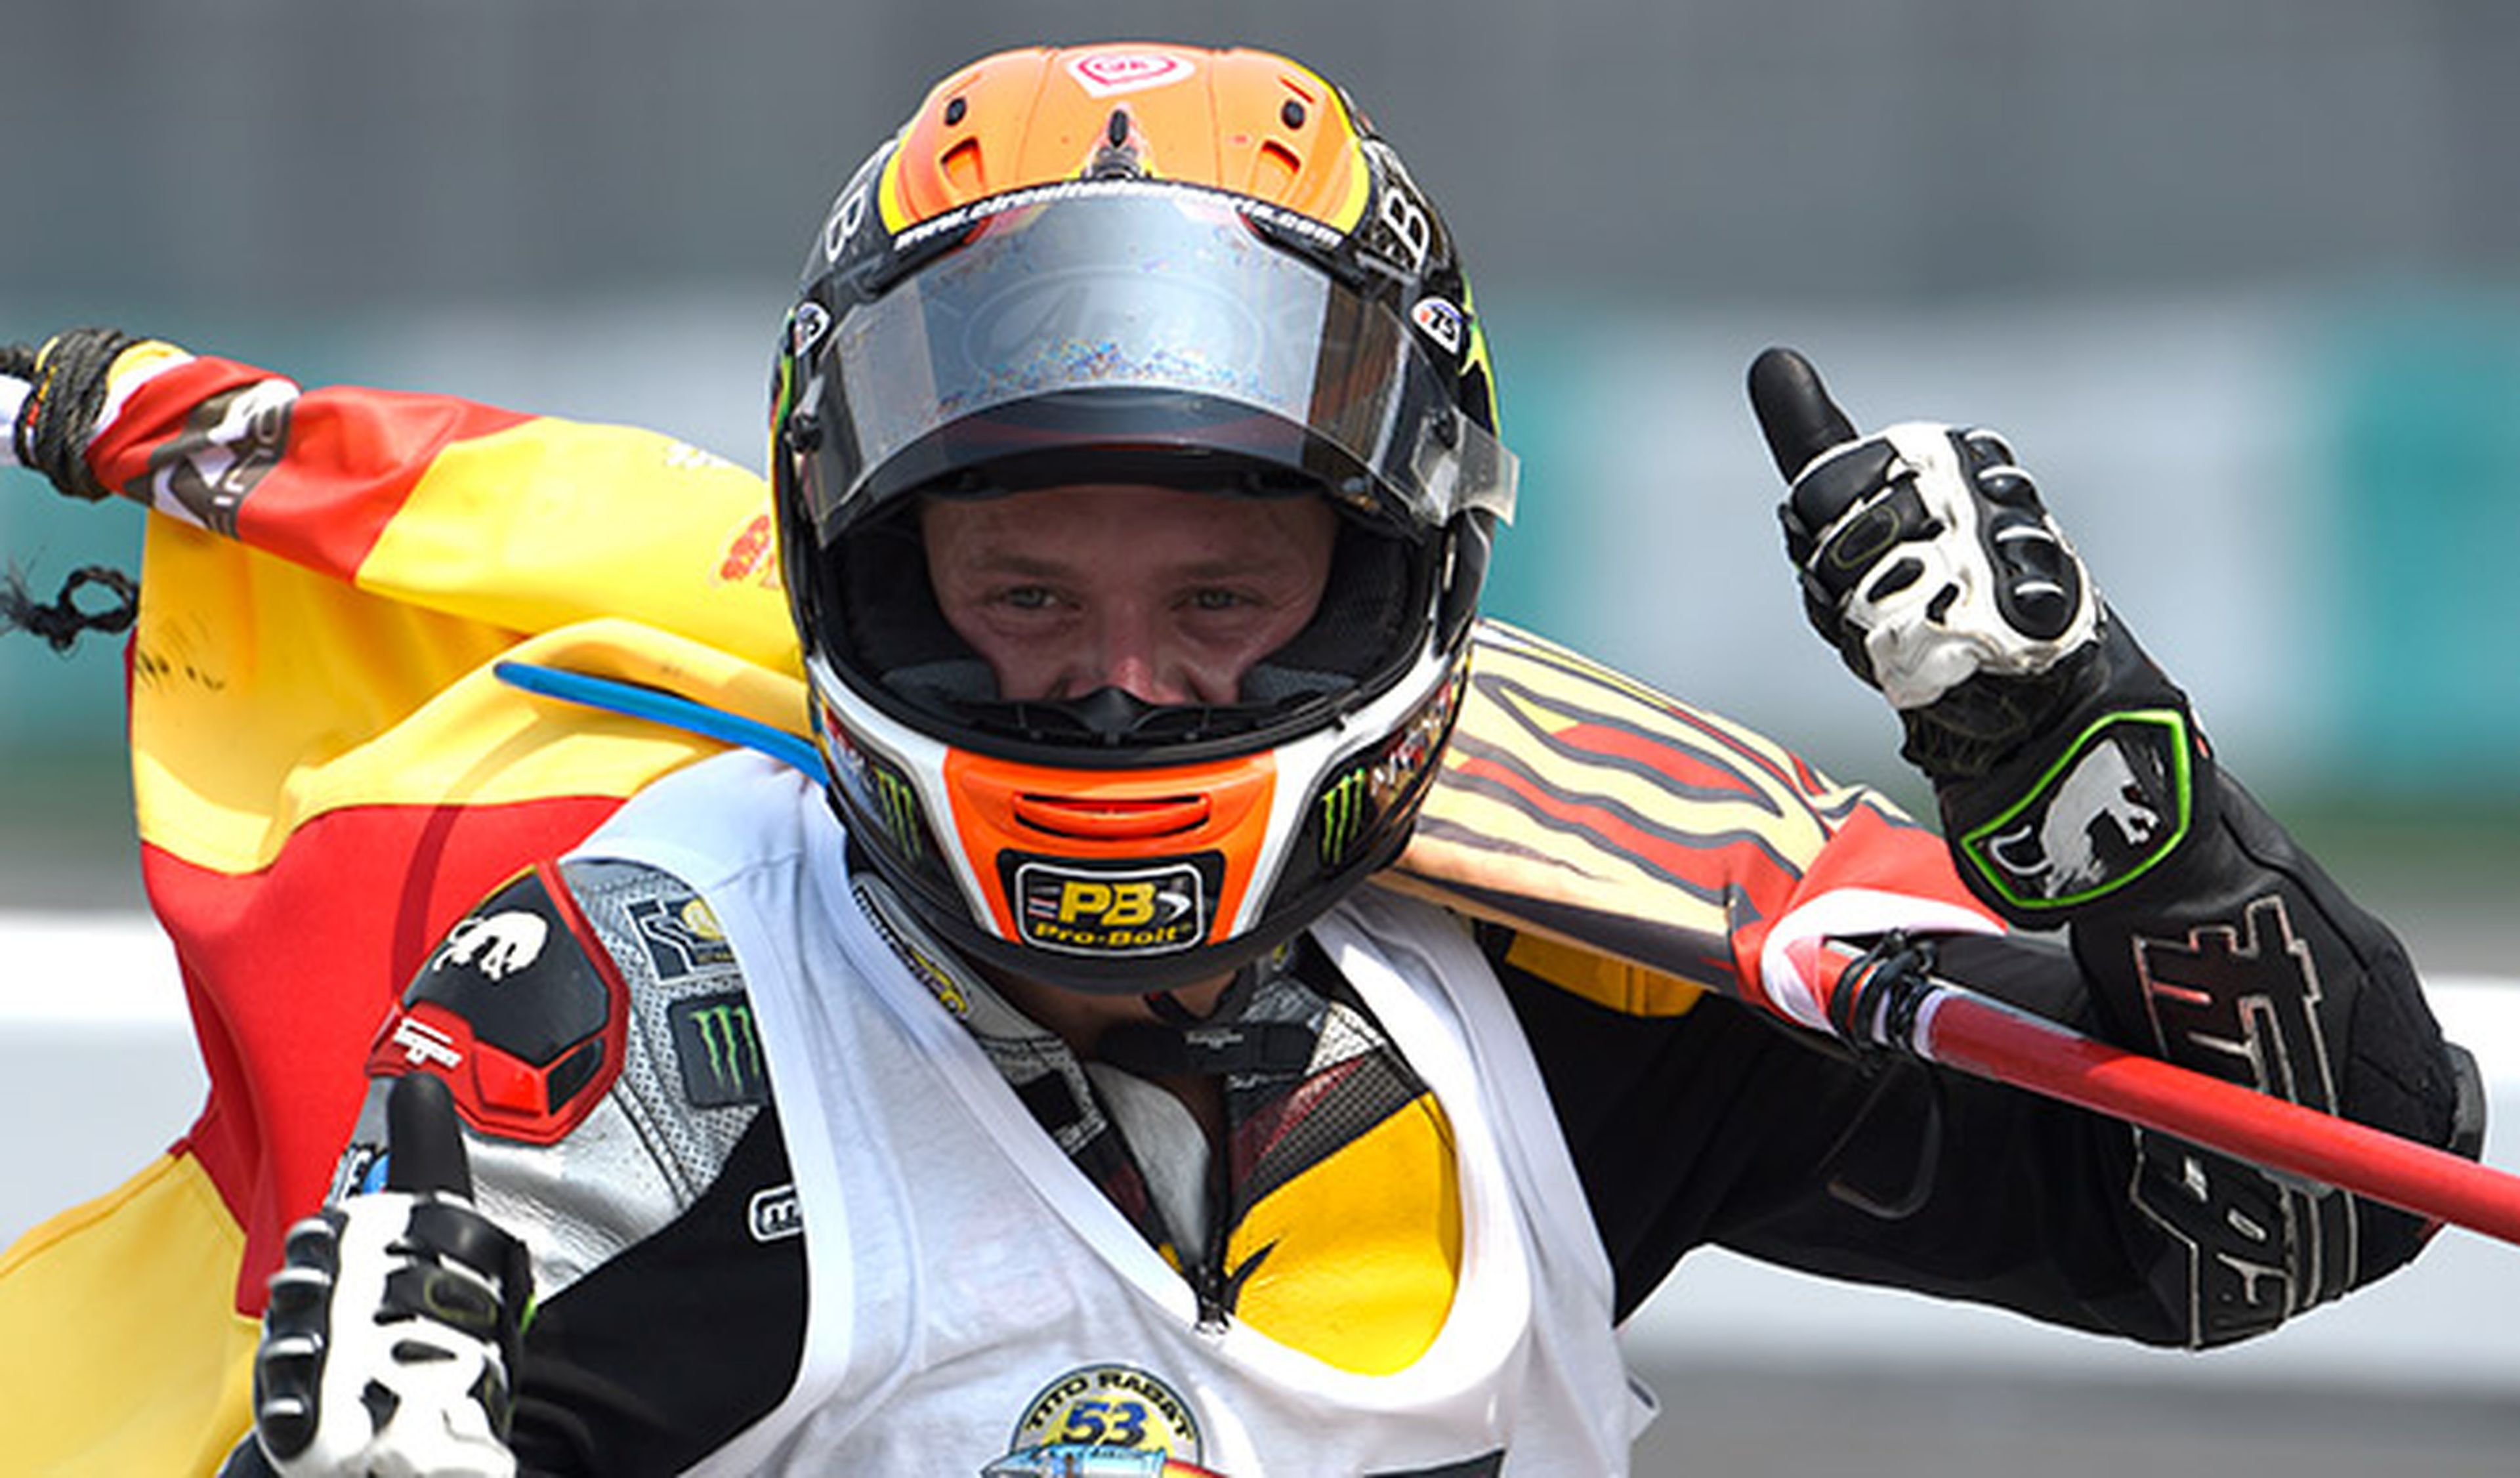 Carrera Moto2 GP Malasia 2014: Rabat, campeón del mundo